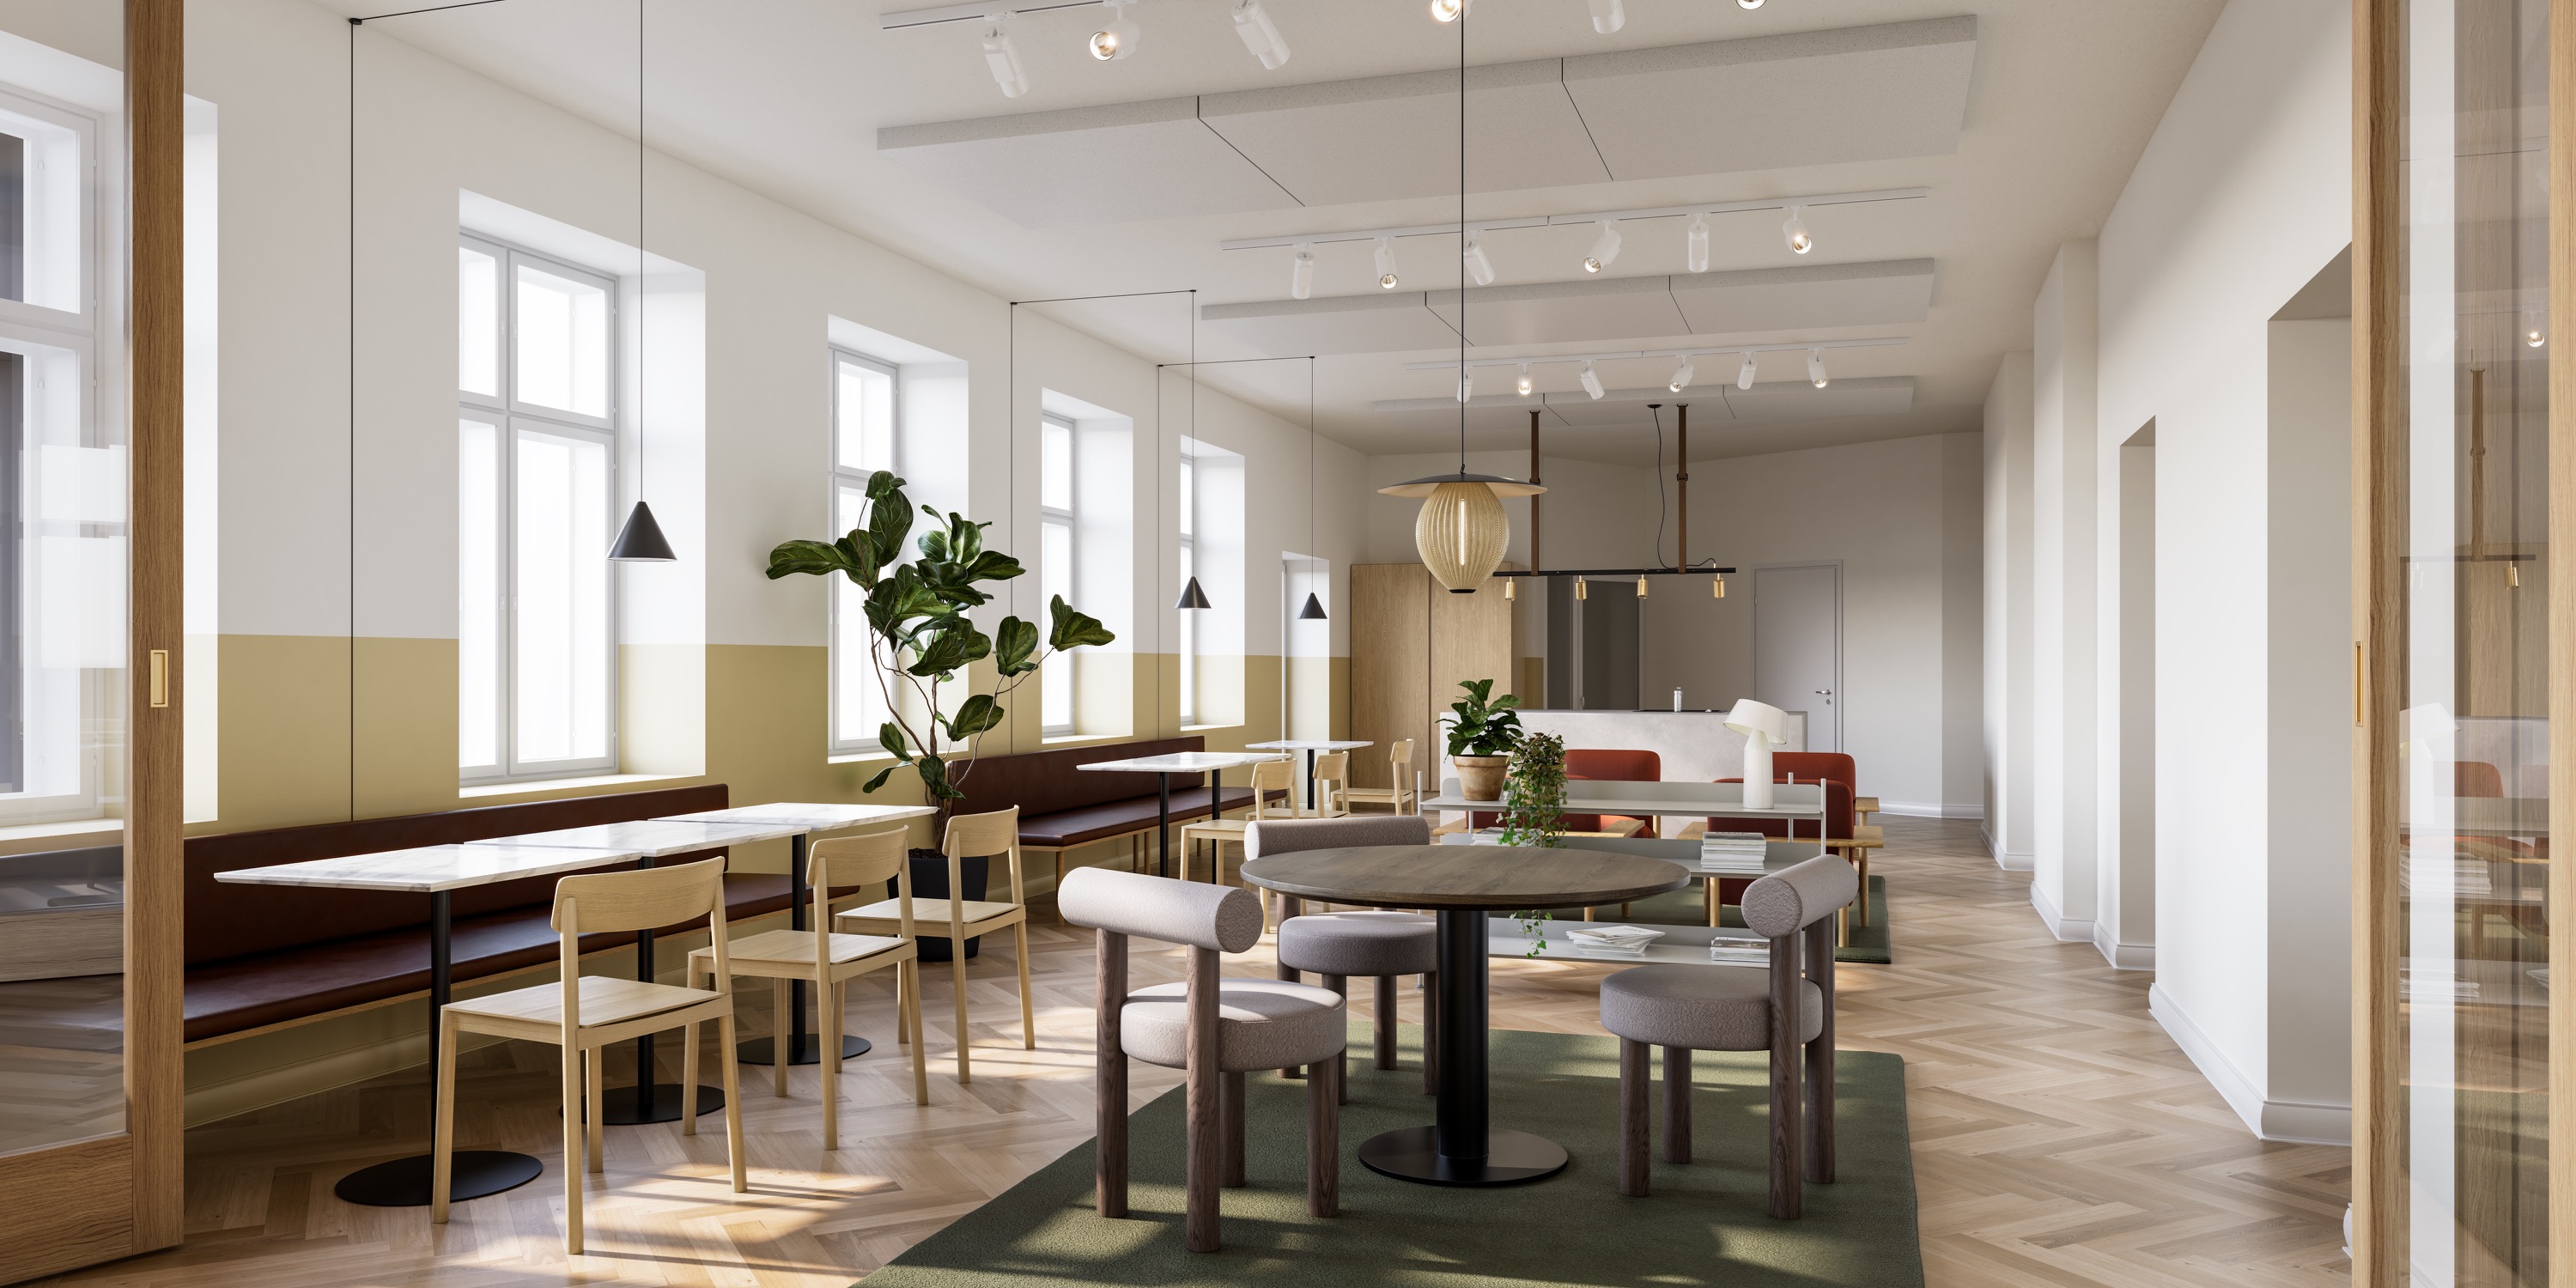 Armaan Kulma real estate development design fifth floor kitchen lounge coworking visualisation